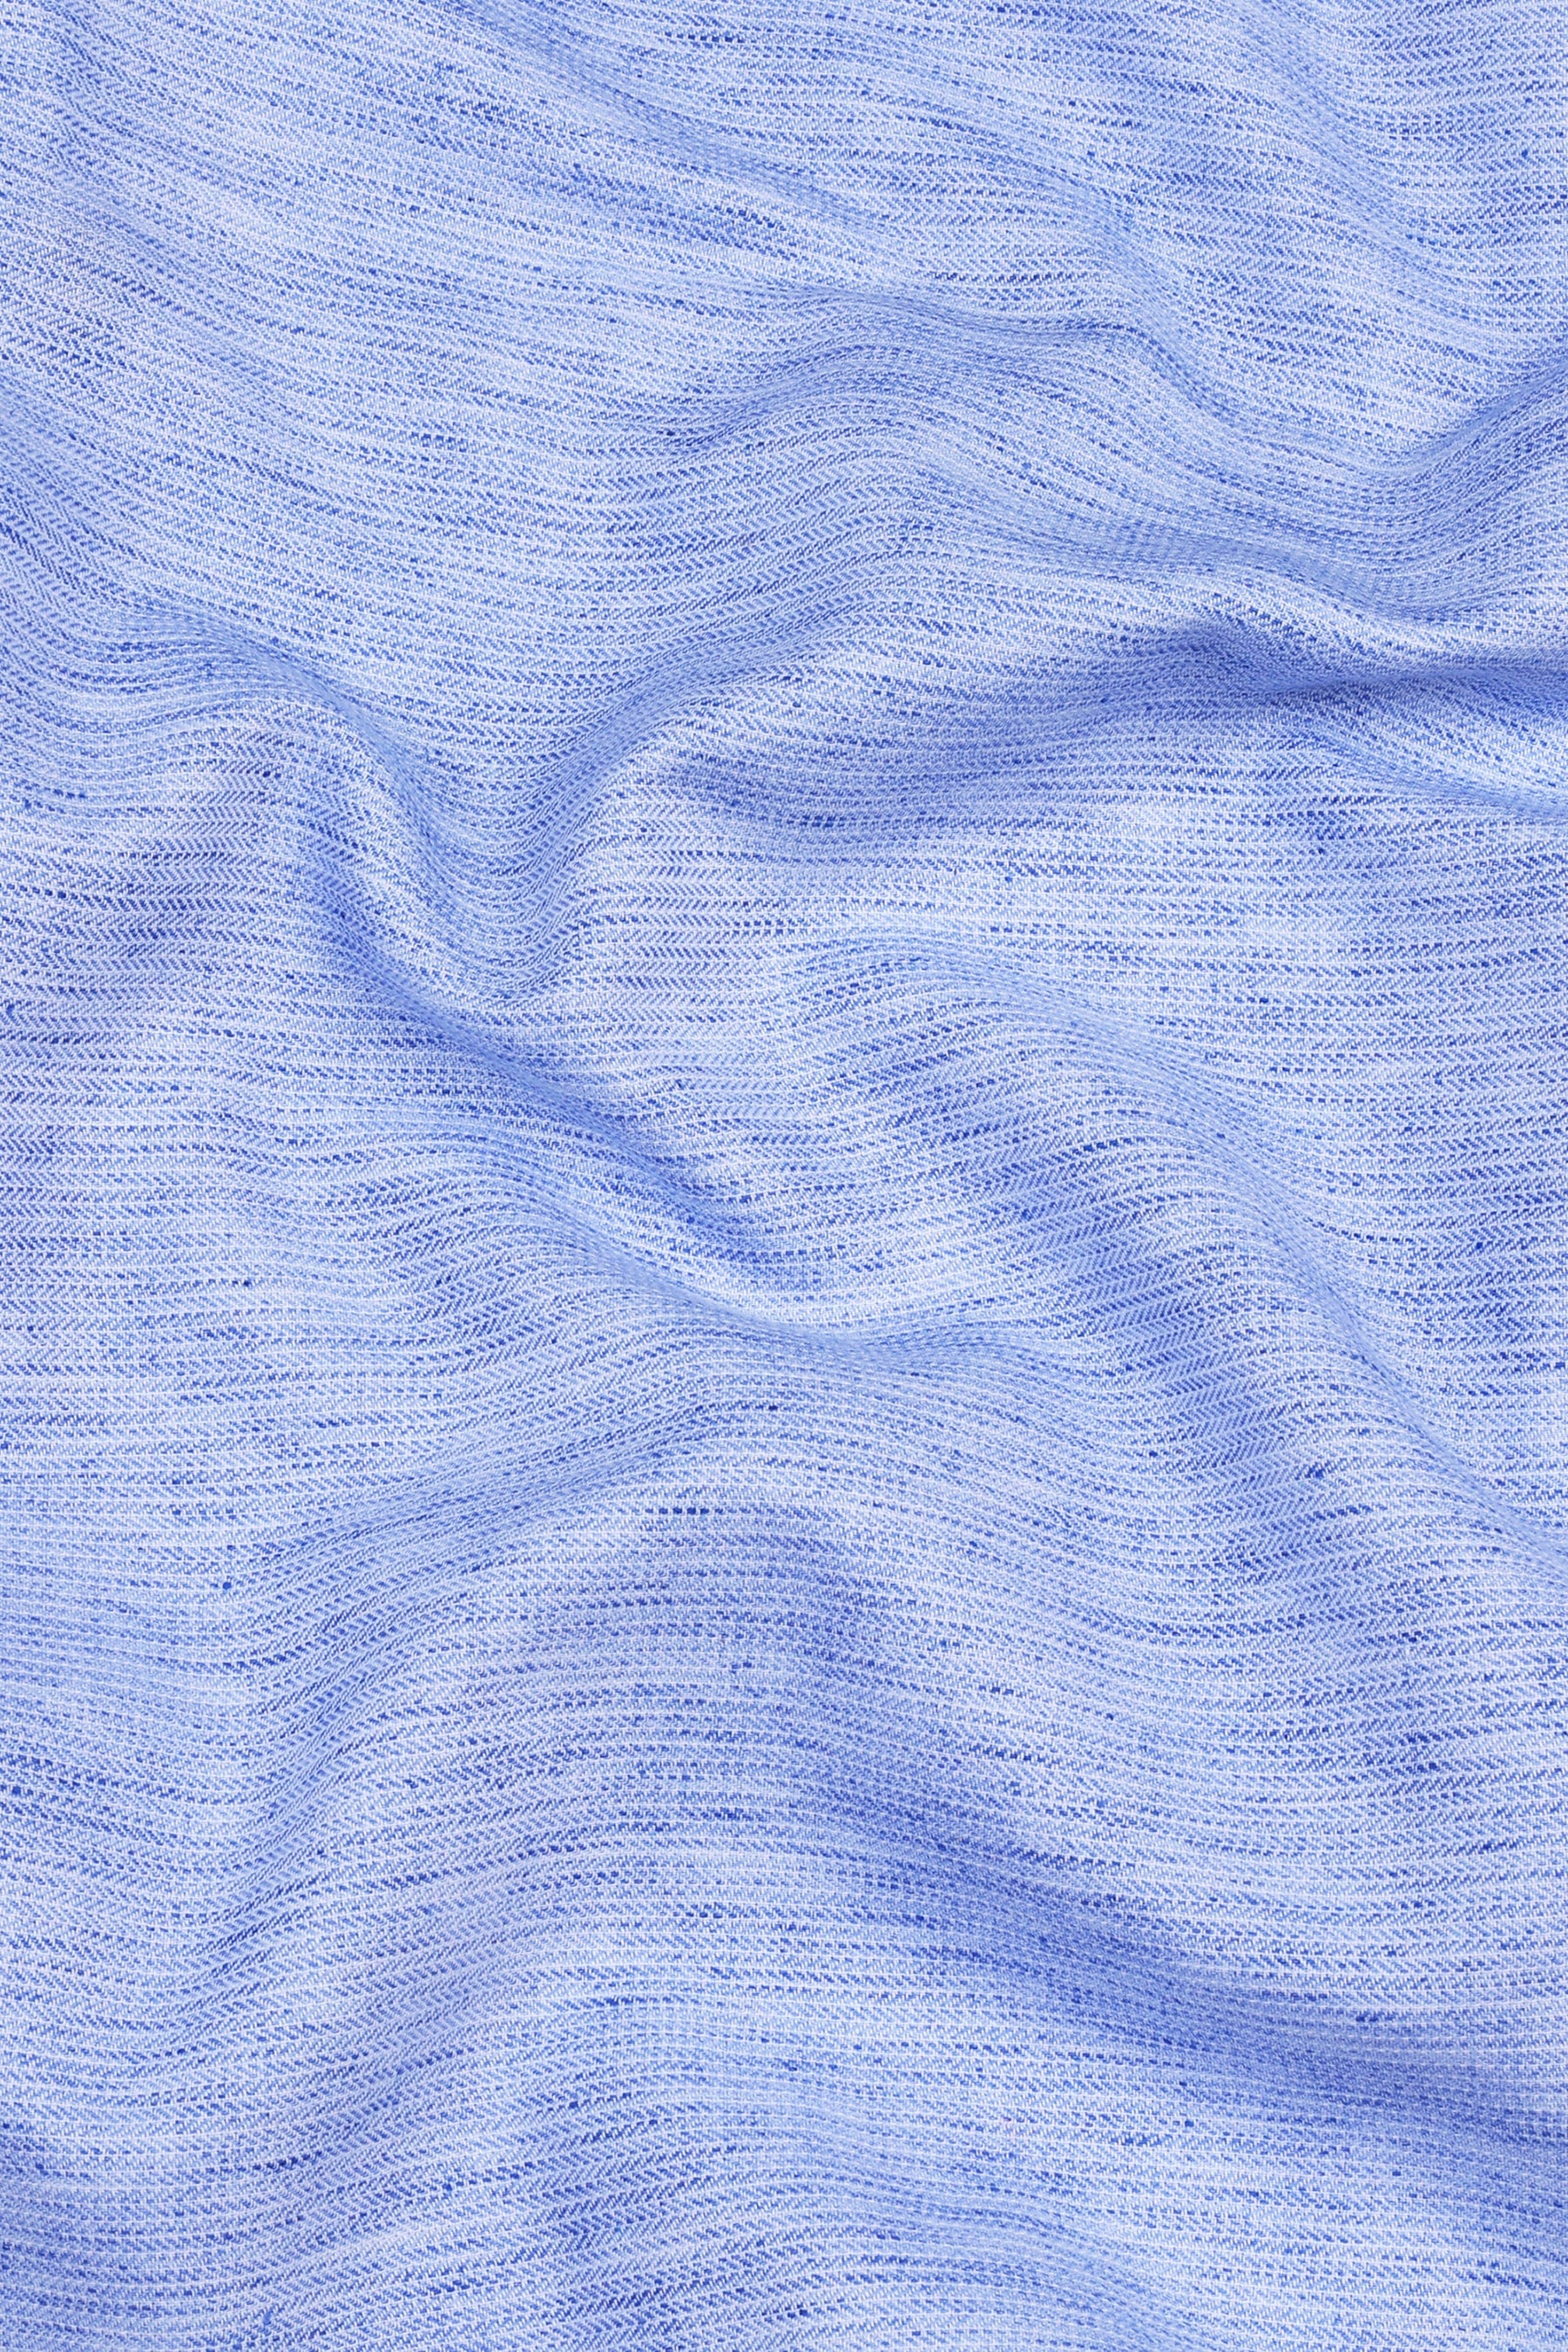 Blue herringbone texture cotton shirt